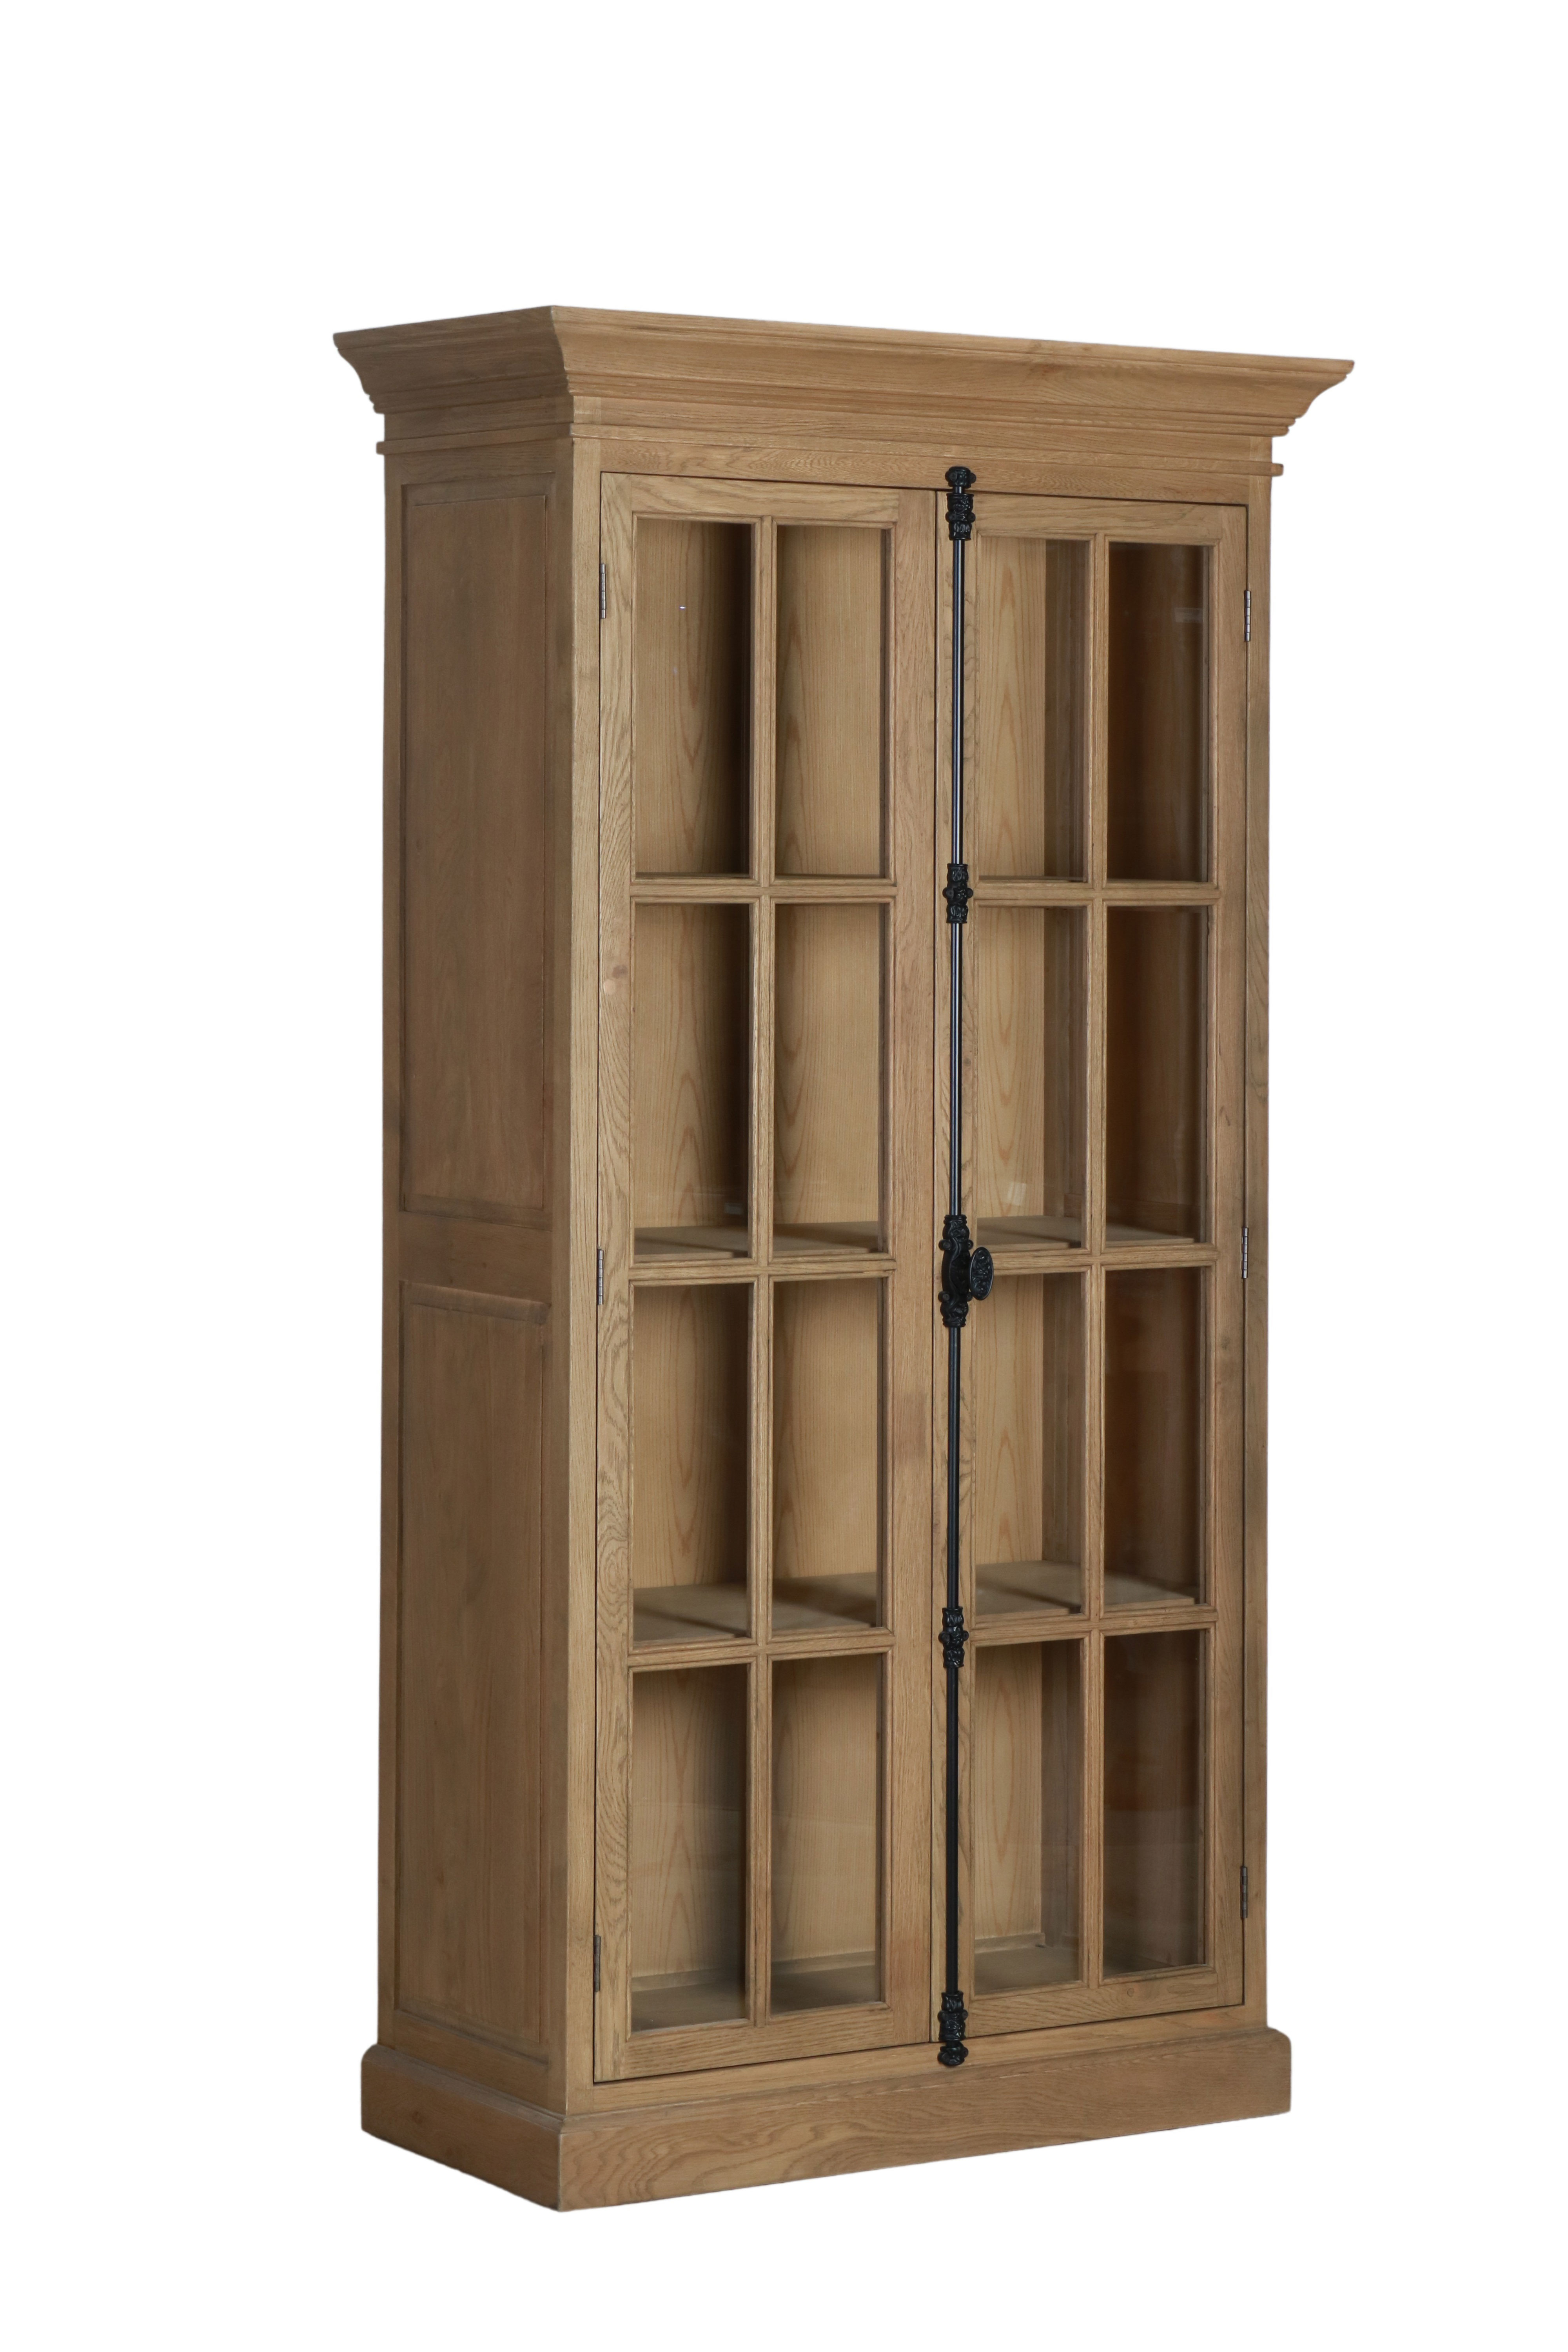 Oak display cabinet with glass doors